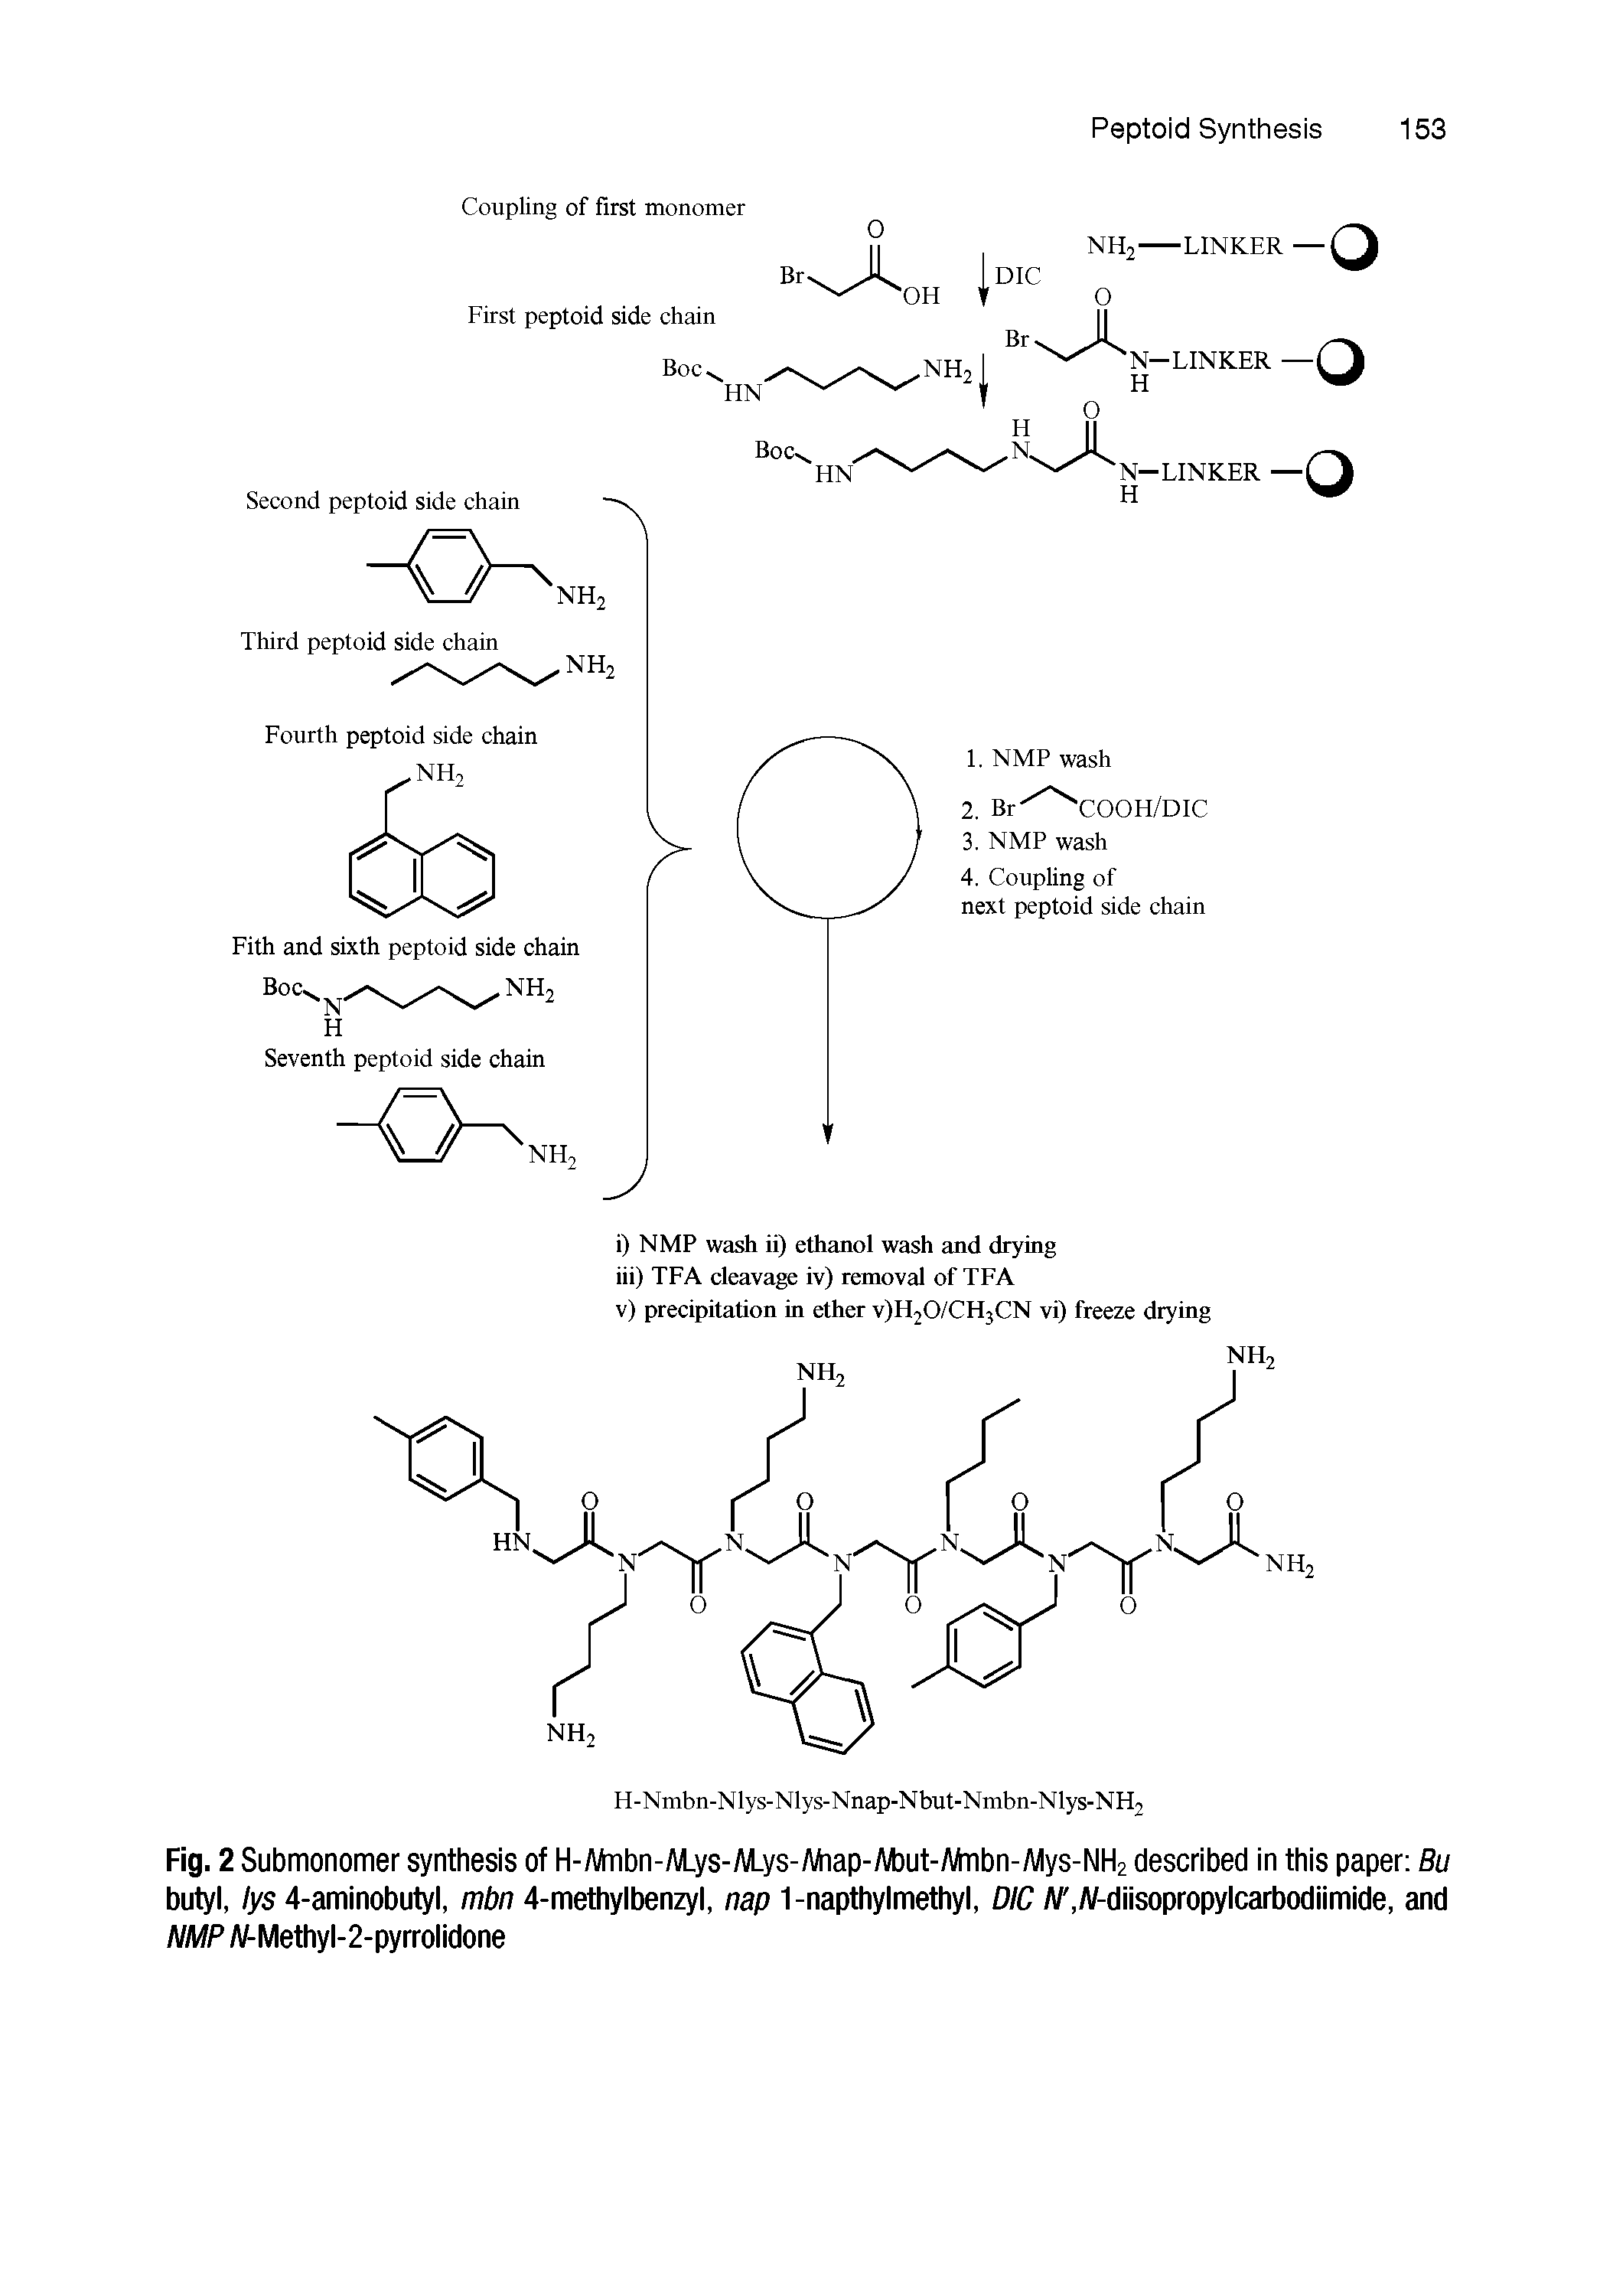 Fig. 2 Submonomer synthesis of H-Mnbn-M.ys-M.ys-Miap-M3ut-Mribn-y ilys-NH2 described in this paper Bu butyl, lys 4-aminobutyl, mbn 4-methylbenzyl, nap 1-napthylmethyl, DIC /V, /V-diisopropylcarbodiimide, and NMP /V-Methyl-2-pyrrolidone...